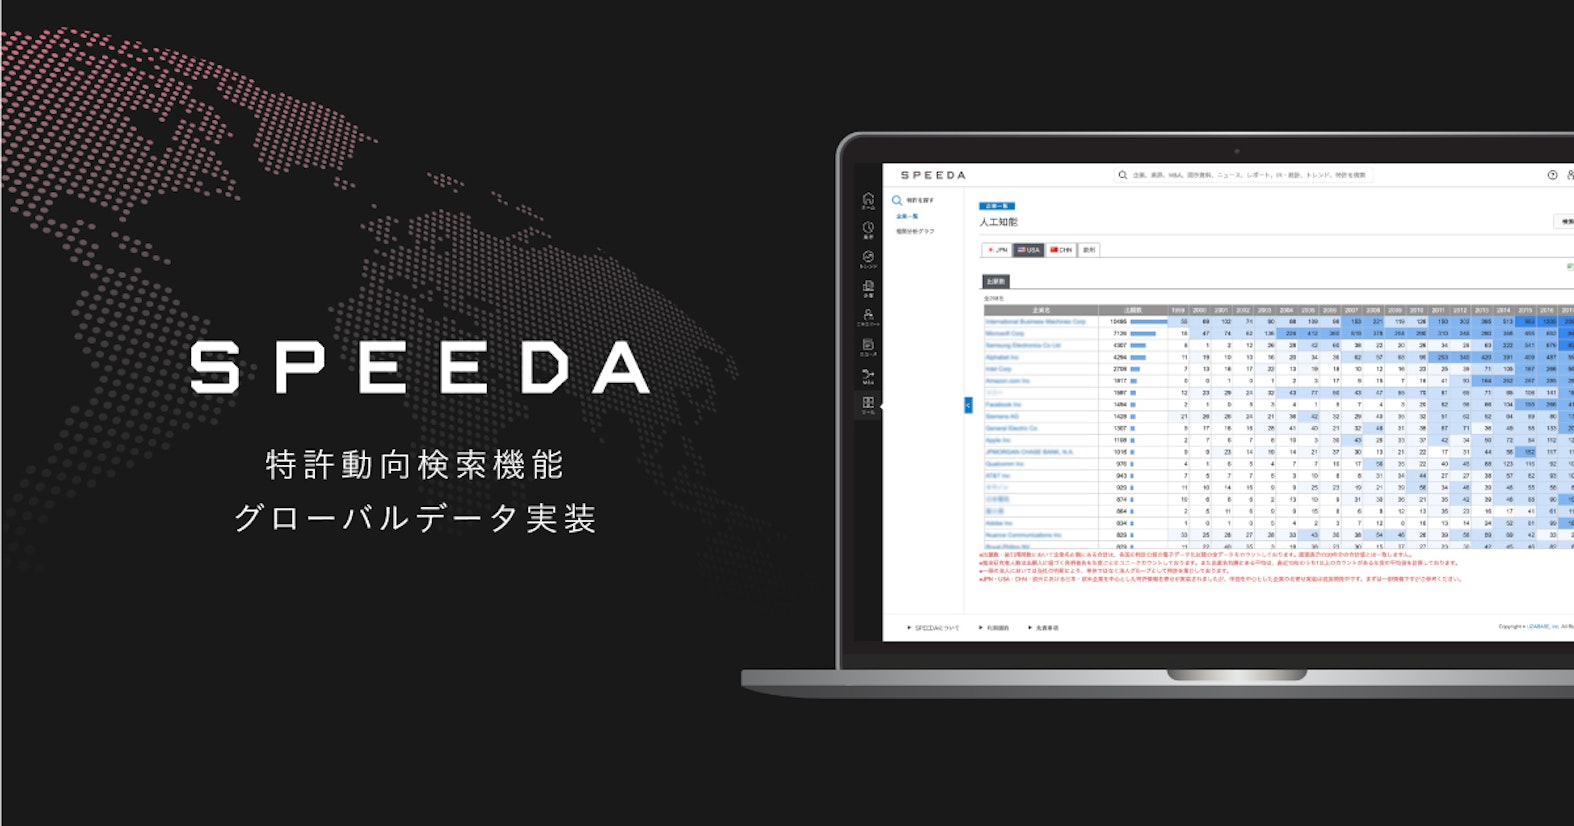 SPEEDA、未来の事業環境における機会と脅威を捉える「特許動向検索」機能に、米中欧のグローバルデータを実装